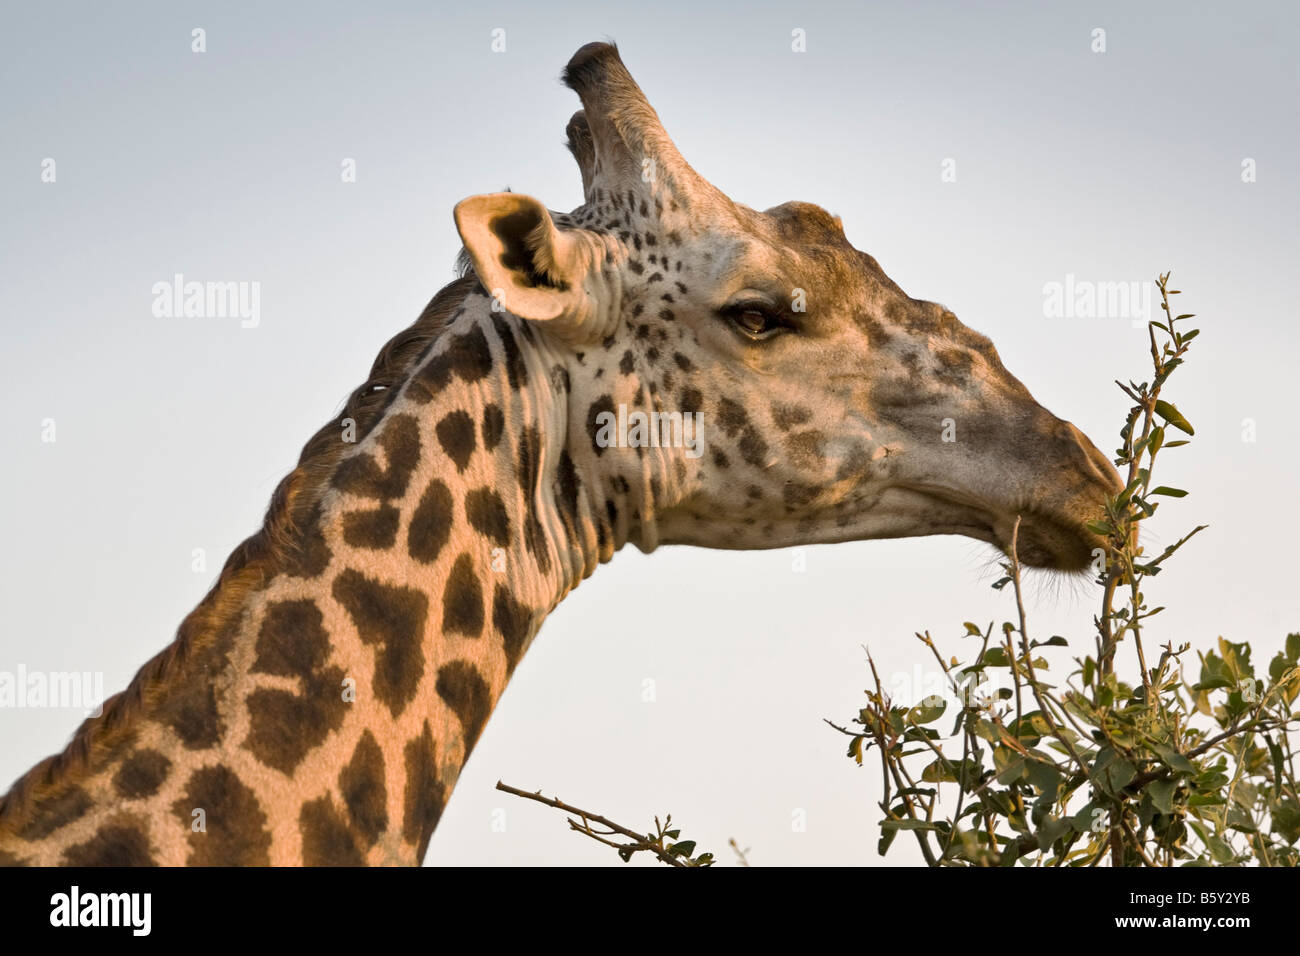 Thornycroft Giraffe at South Luangwa National Park in Zambia Stock Photo